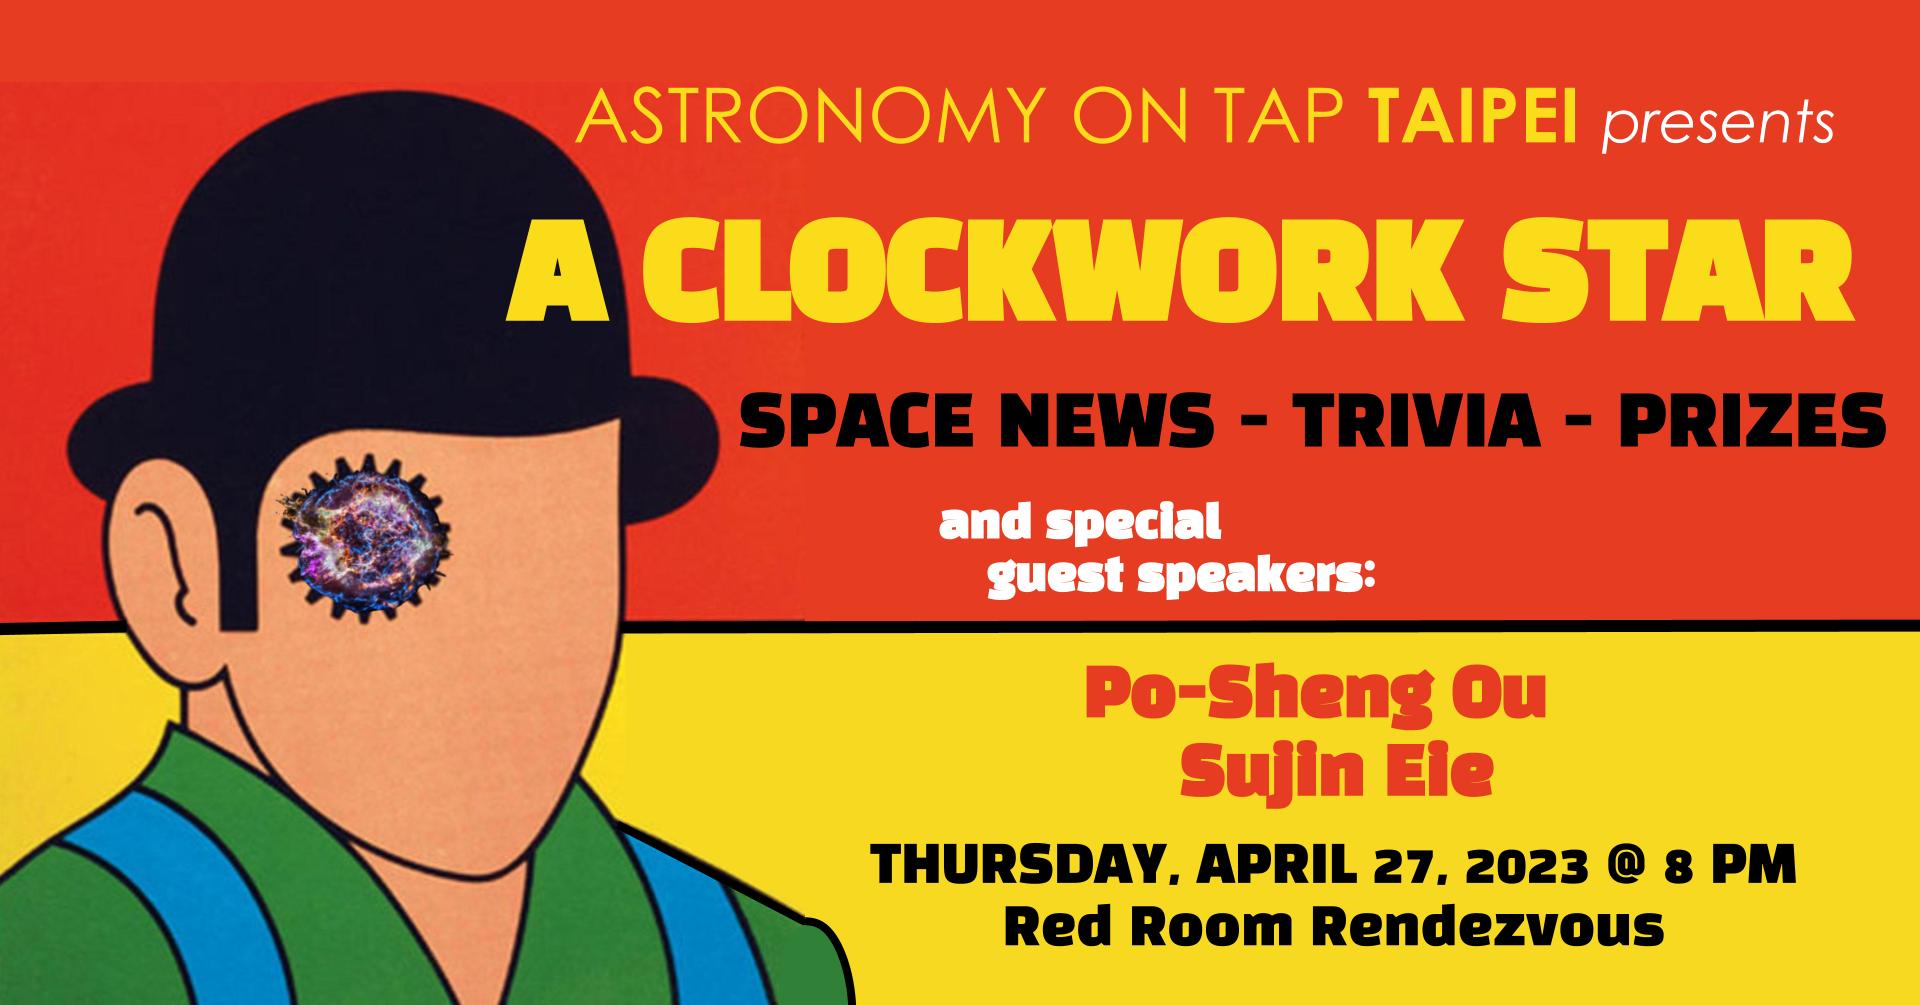 Astronomy on Tap Taipei presents: A Clockwork Star. Thursday April 27th 2023